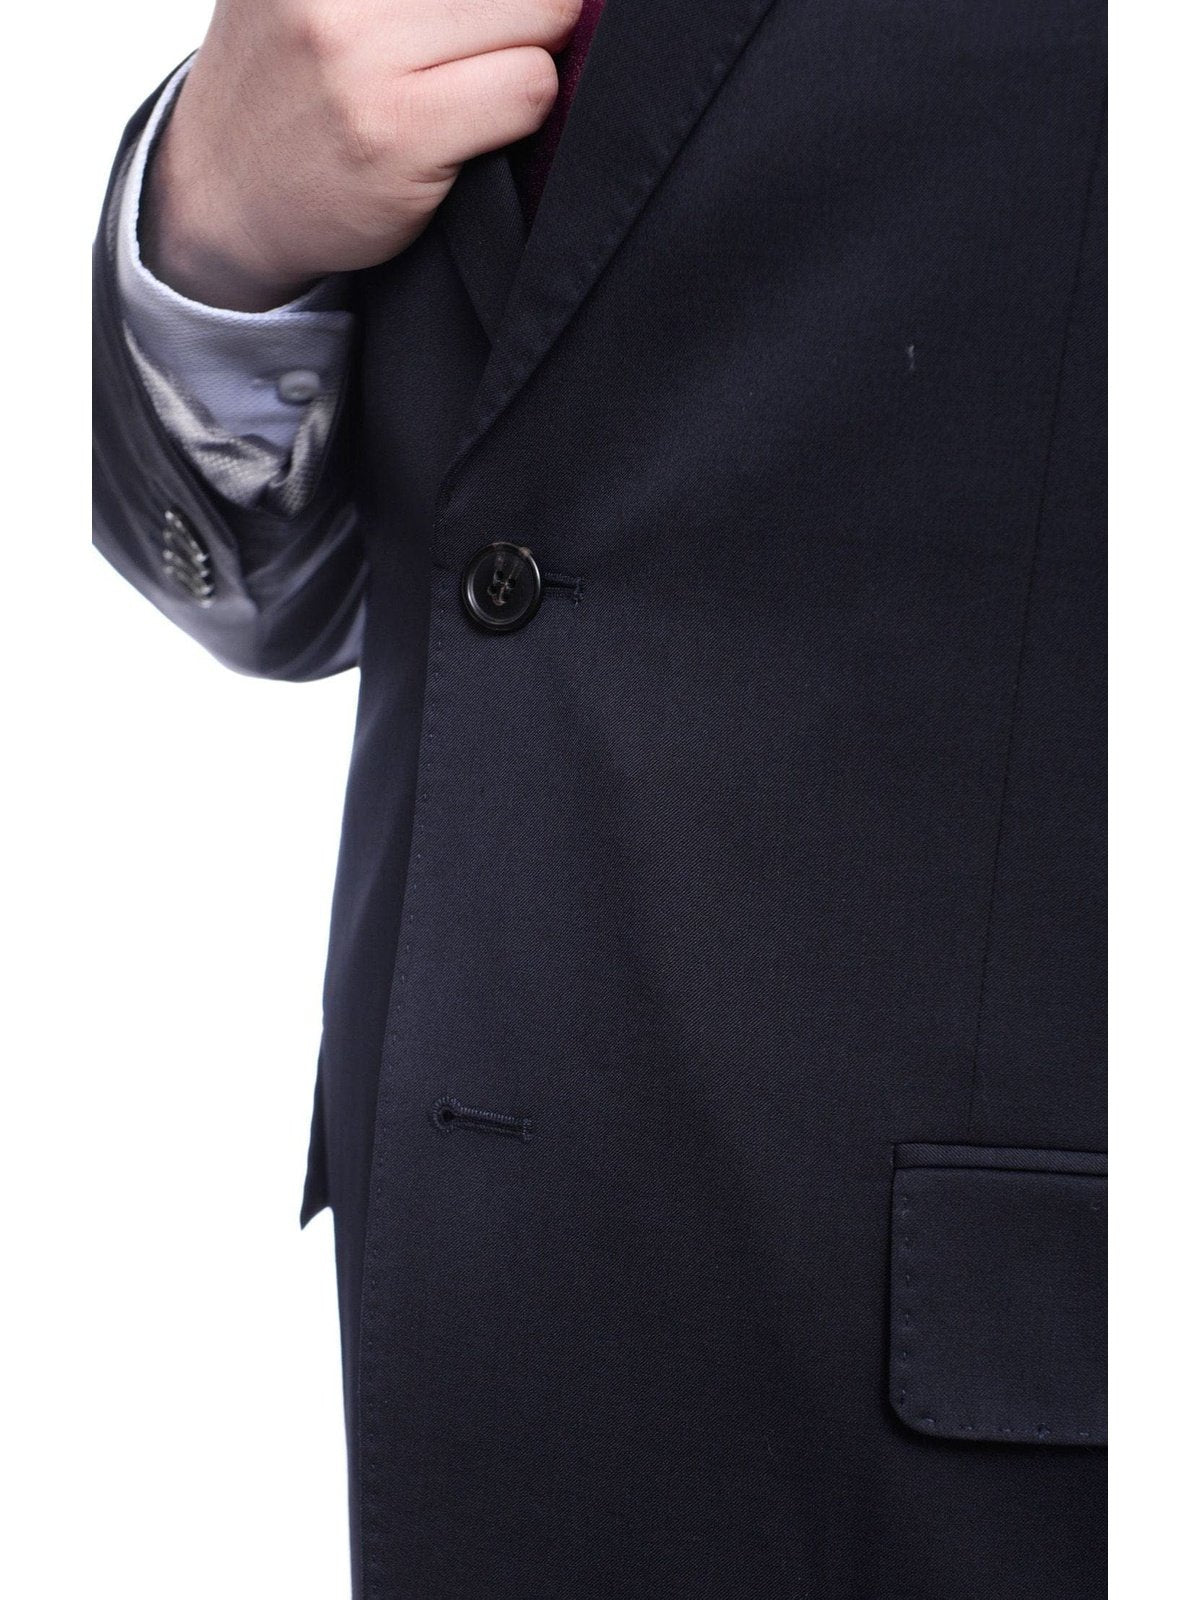 Arthur Black TWO PIECE SUITS Men's Arthur Black Executive Portly Fit Solid Navy Blue Two Button Wool Suit